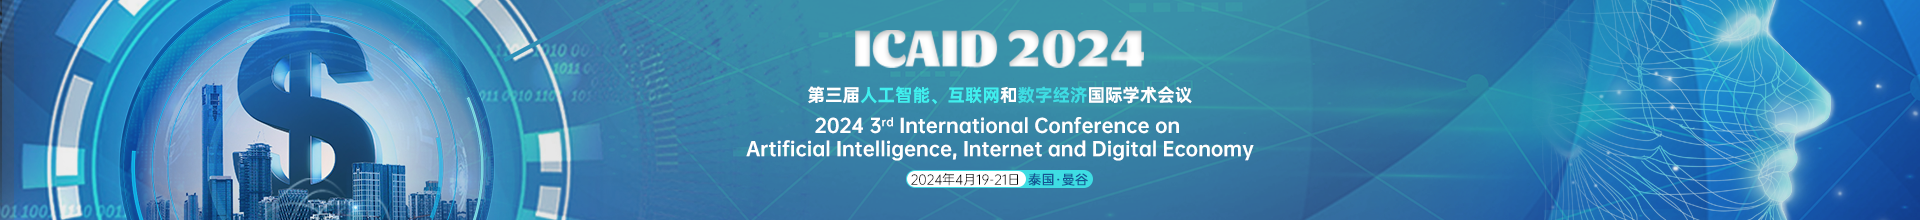 ICAID 2024 学术会议云.png